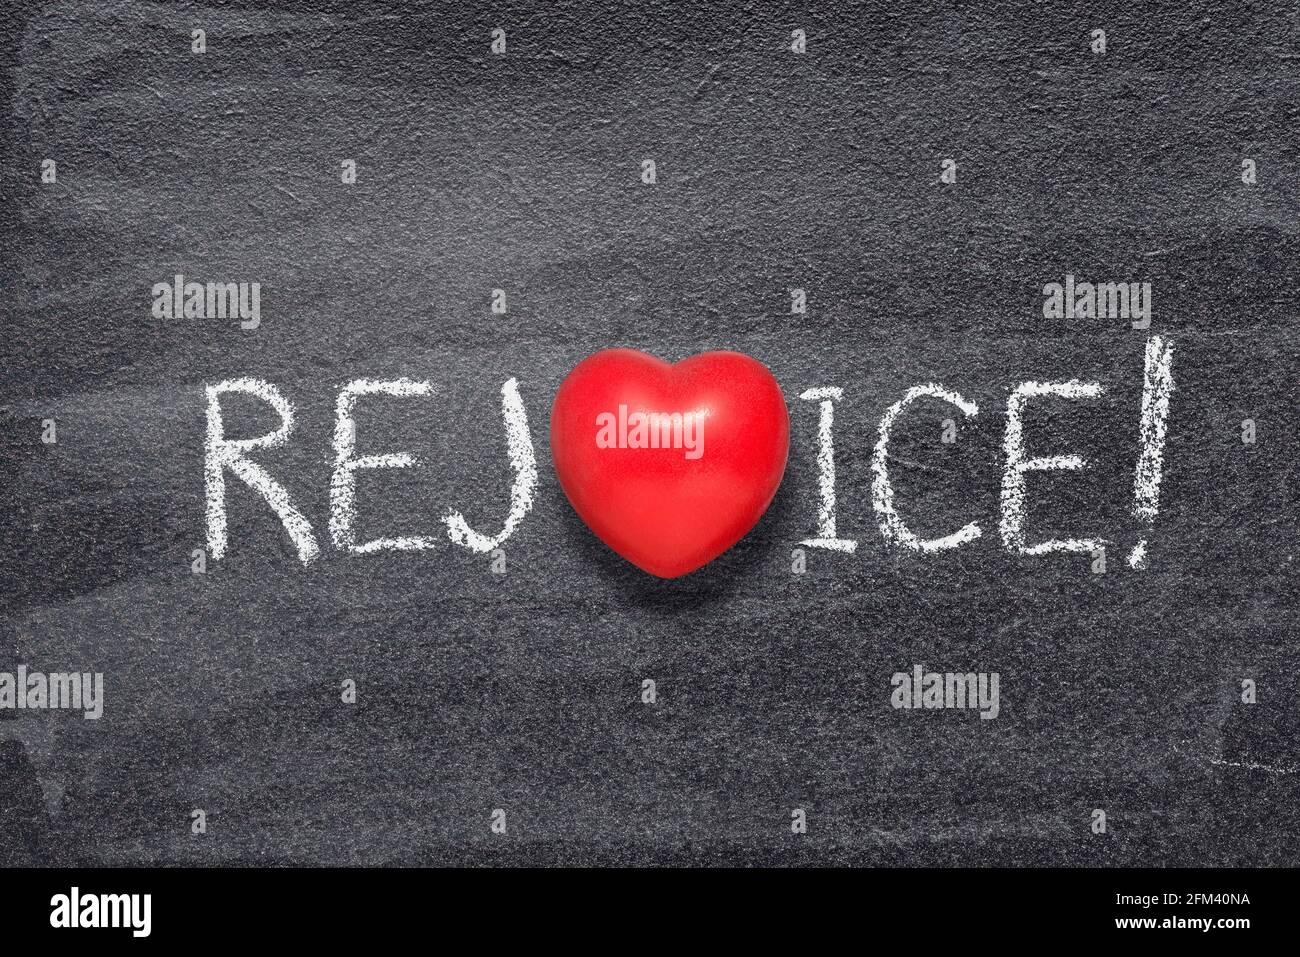 rejoice word written on chalkboard with red heart symbol Stock Photo